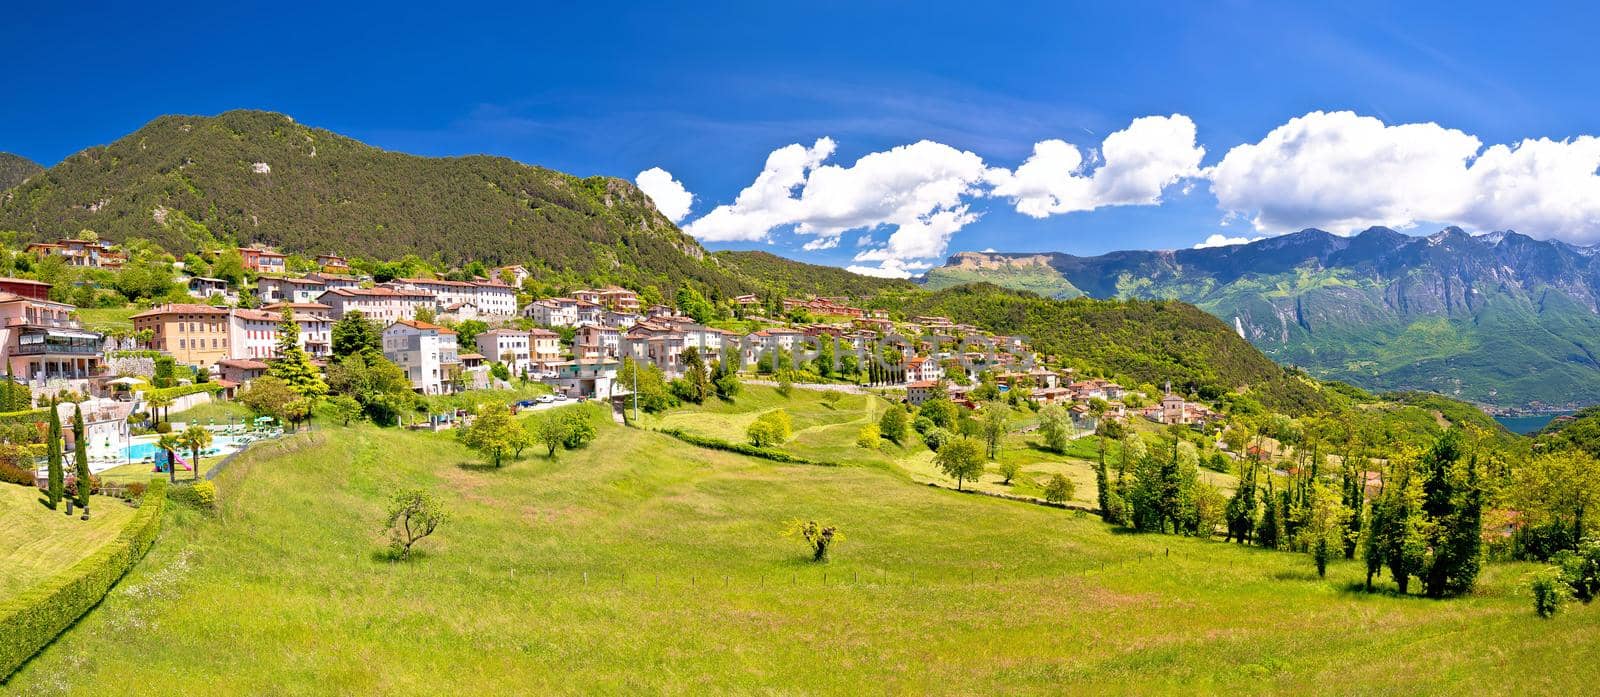 Idyllic village of Vesio in Dolomites Alps above Limone sul Garda by xbrchx